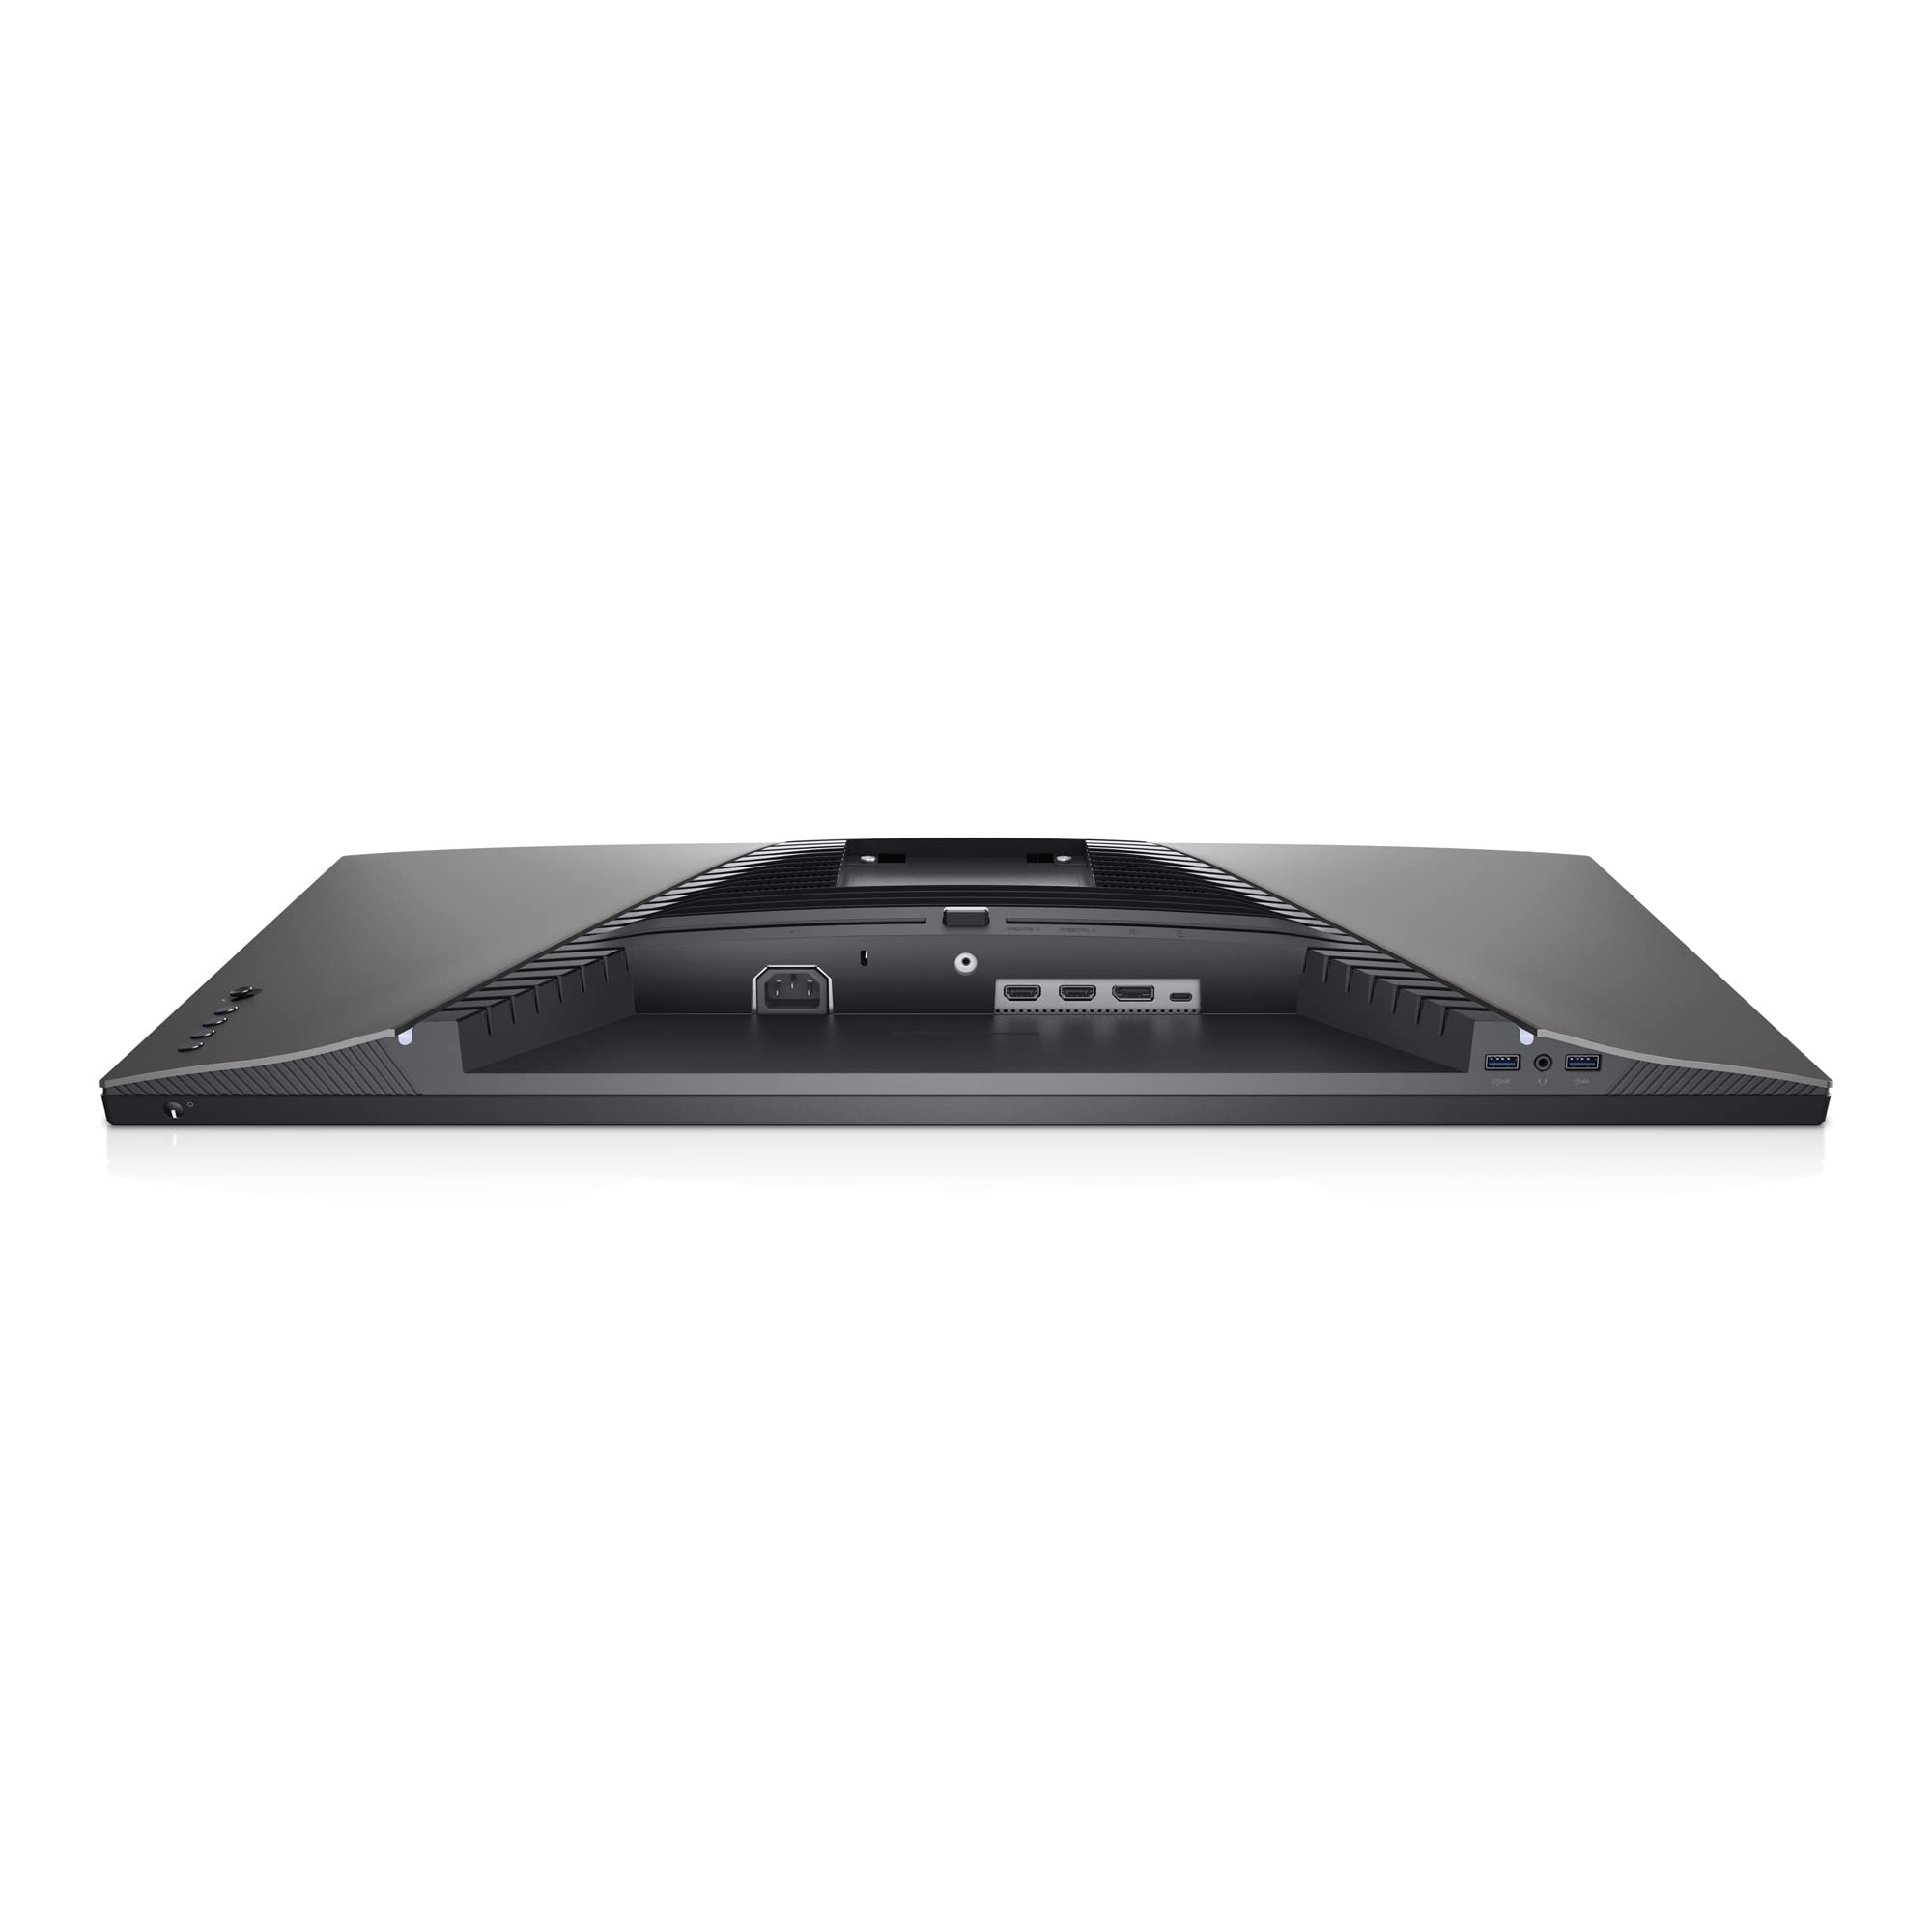 Dell Gaming Monitor 32 Inch, 165Hz, Quad-HD Widescreen LED LCD, IPS Display, USB C, (QHD) 2560 x 1440p, HDMI 2.0, DisplayPort 1.4, 1.07 Billion Colors, 1ms (Gray-to-Gray), No Bezel, G3223D - Black